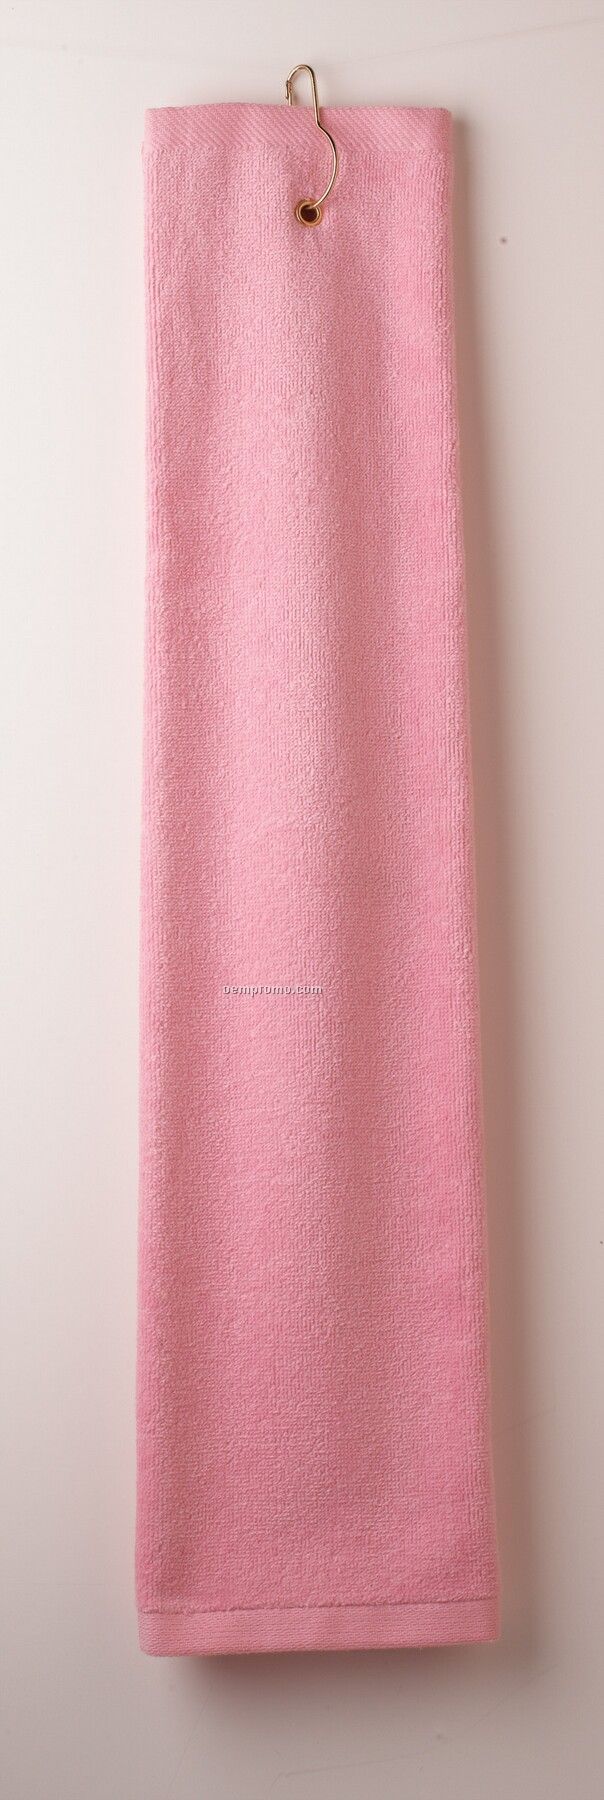 Anvil Hemmed Tri-fold Hand Towel - Colors